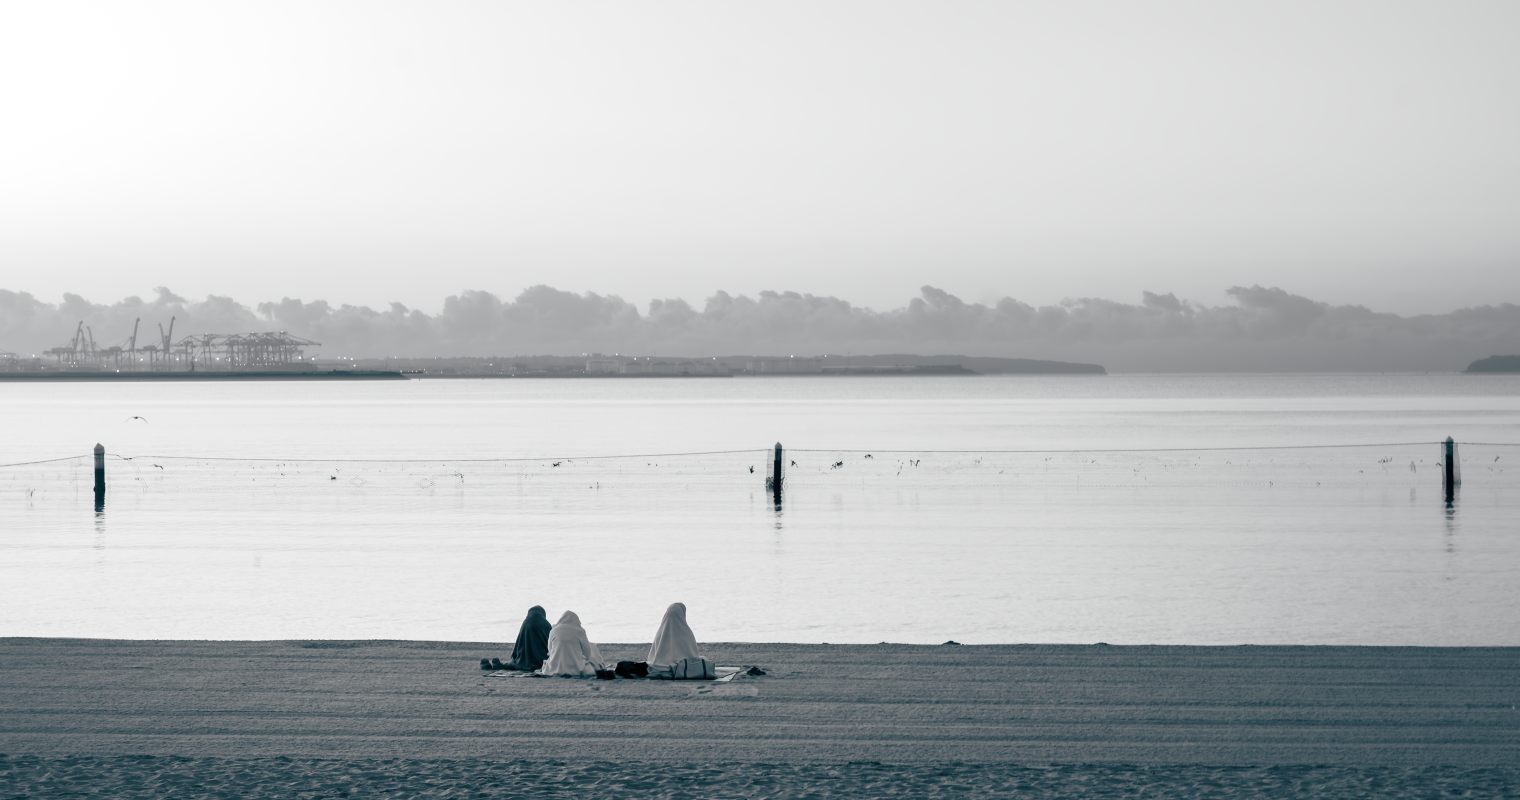 image of three people sitting on the beach